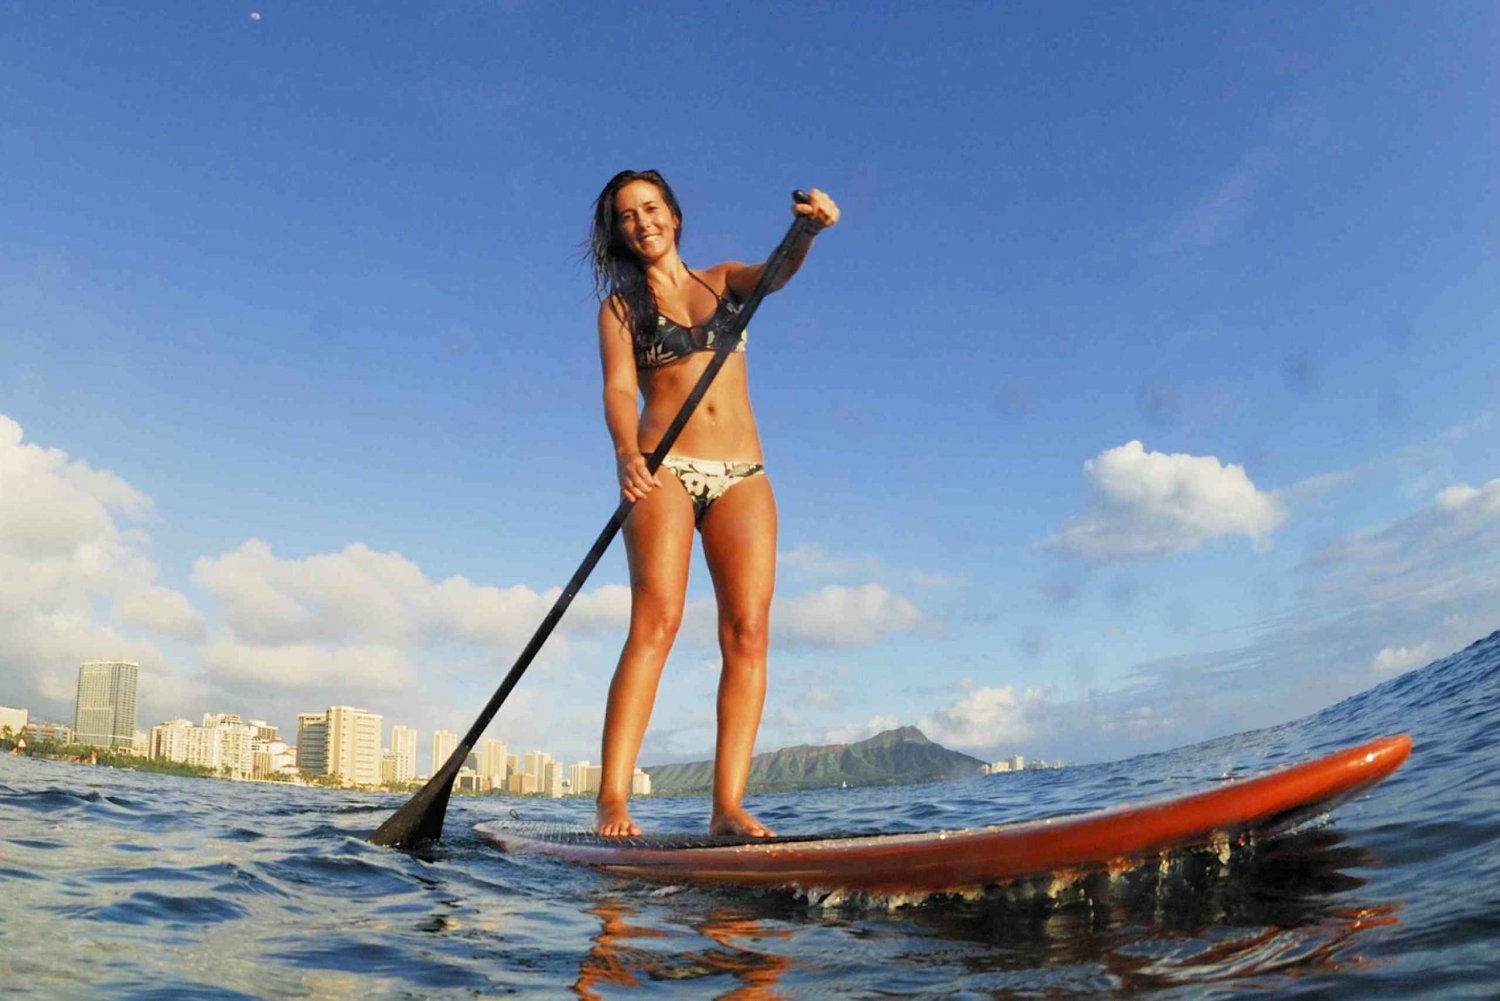 Oahu: Waikiki 2 timers privat lektion i padleboarding